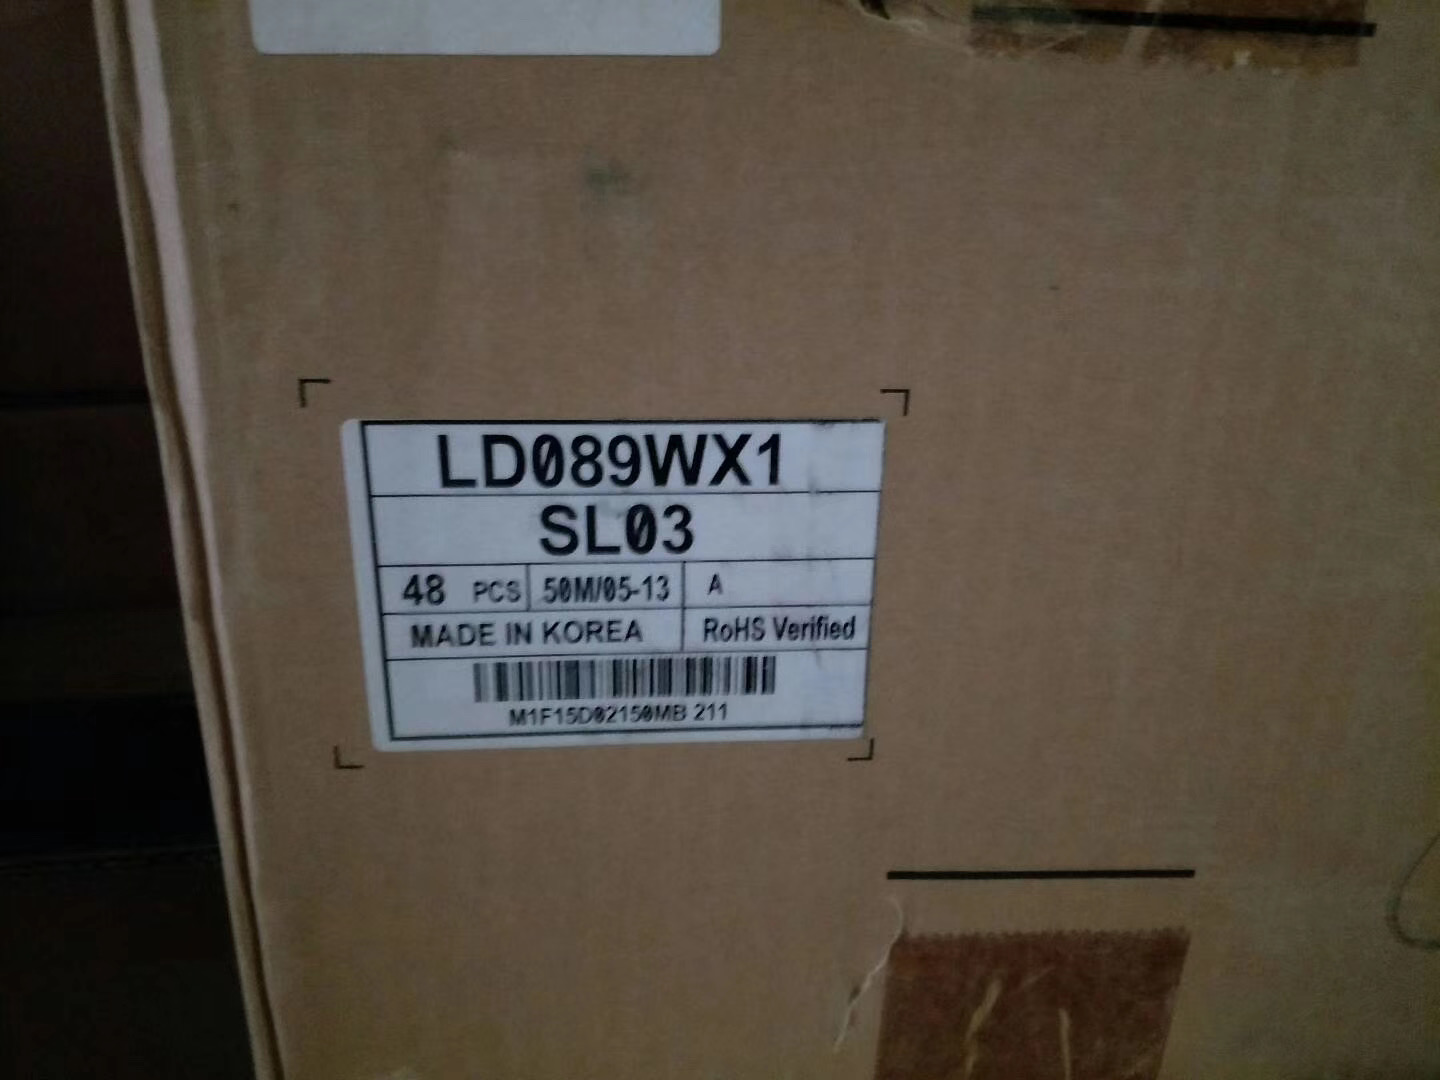 LD089WX1-SL03